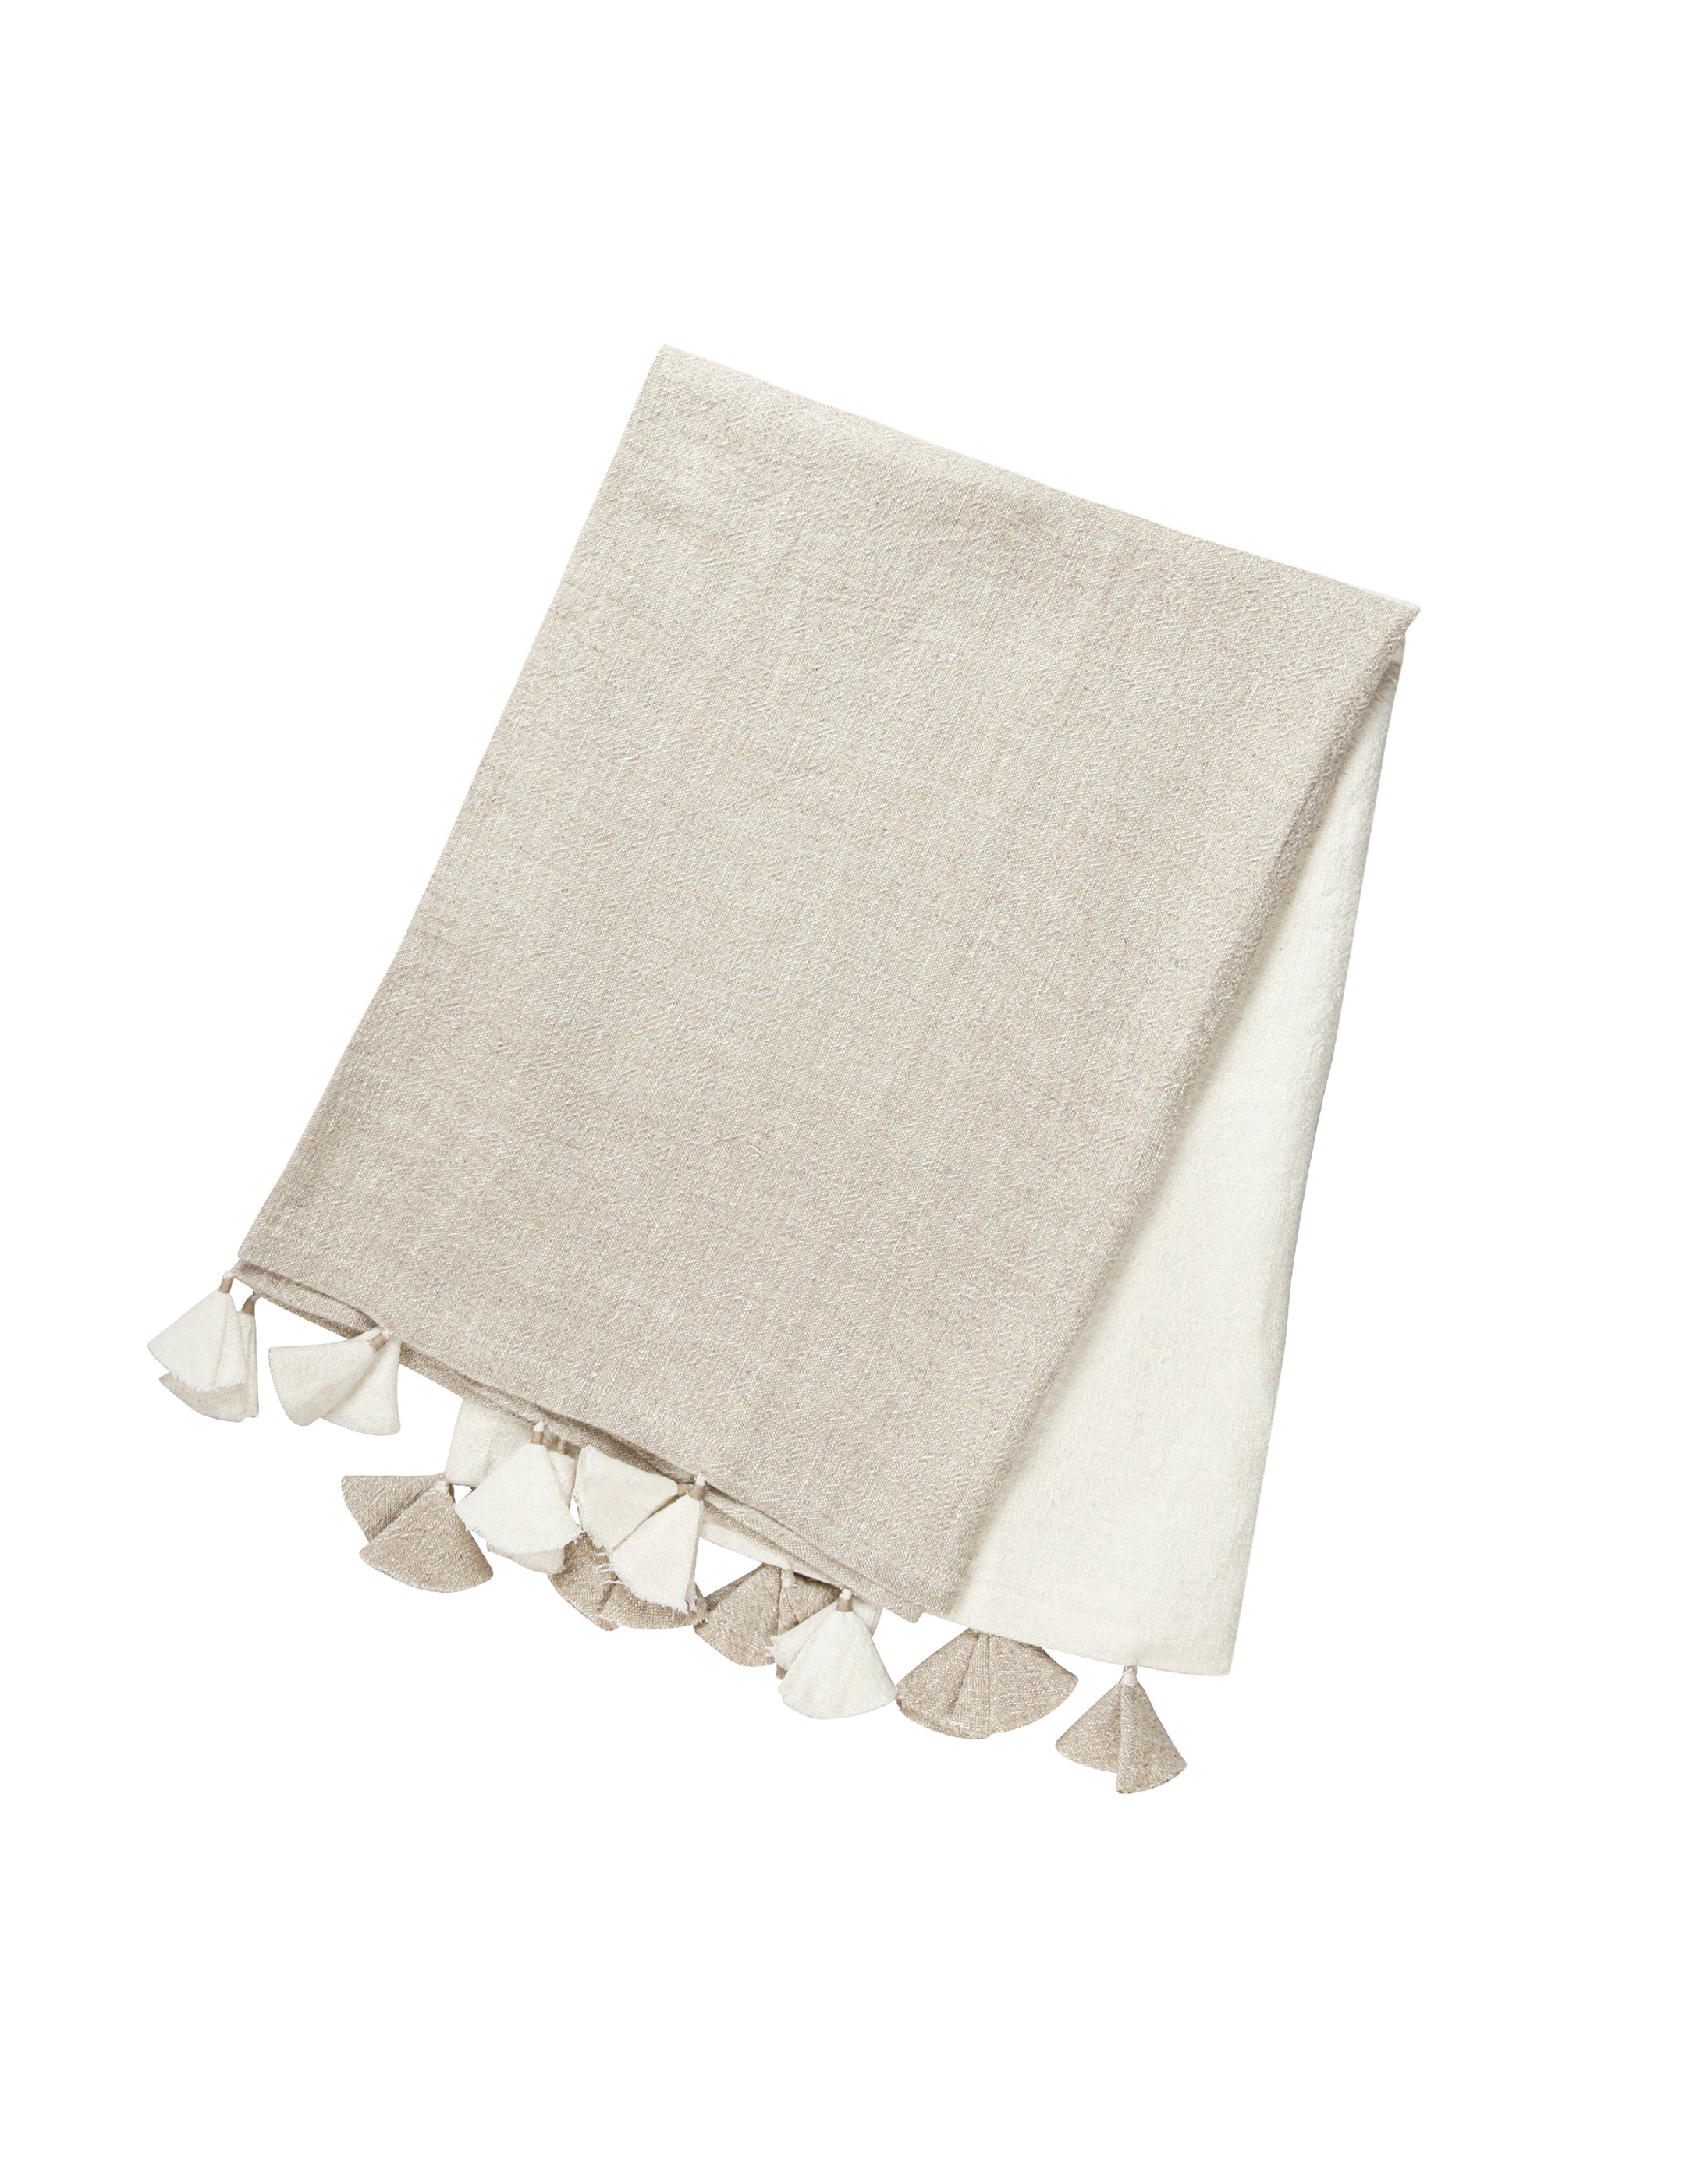 Natural Colorblocked Beige Linen Blanket with Tassels